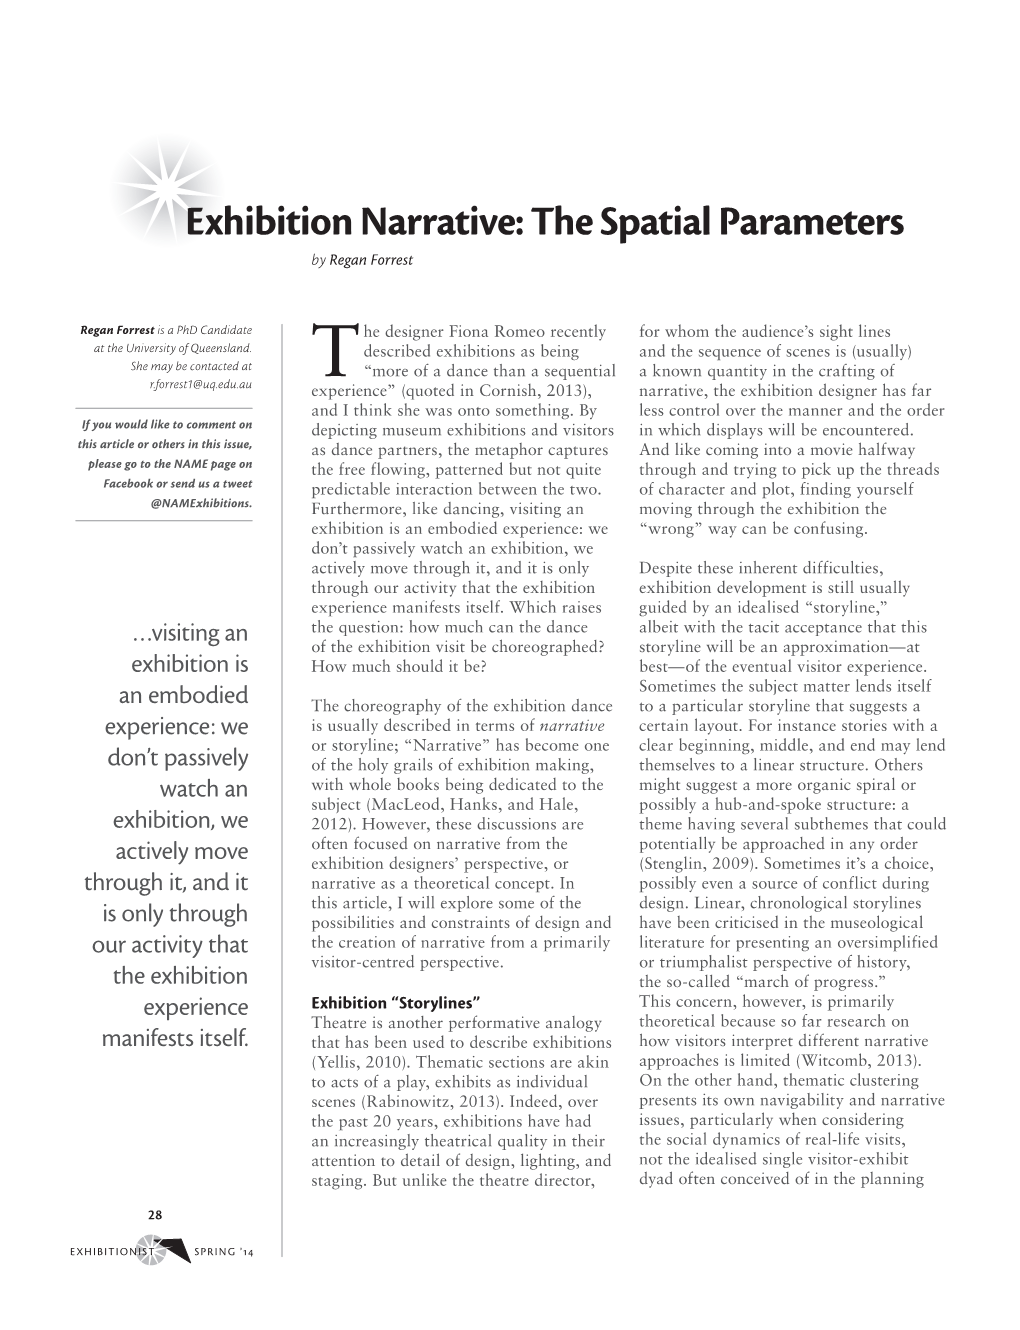 Exhibition Narrative: the Spatial Parameters by Regan Forrest